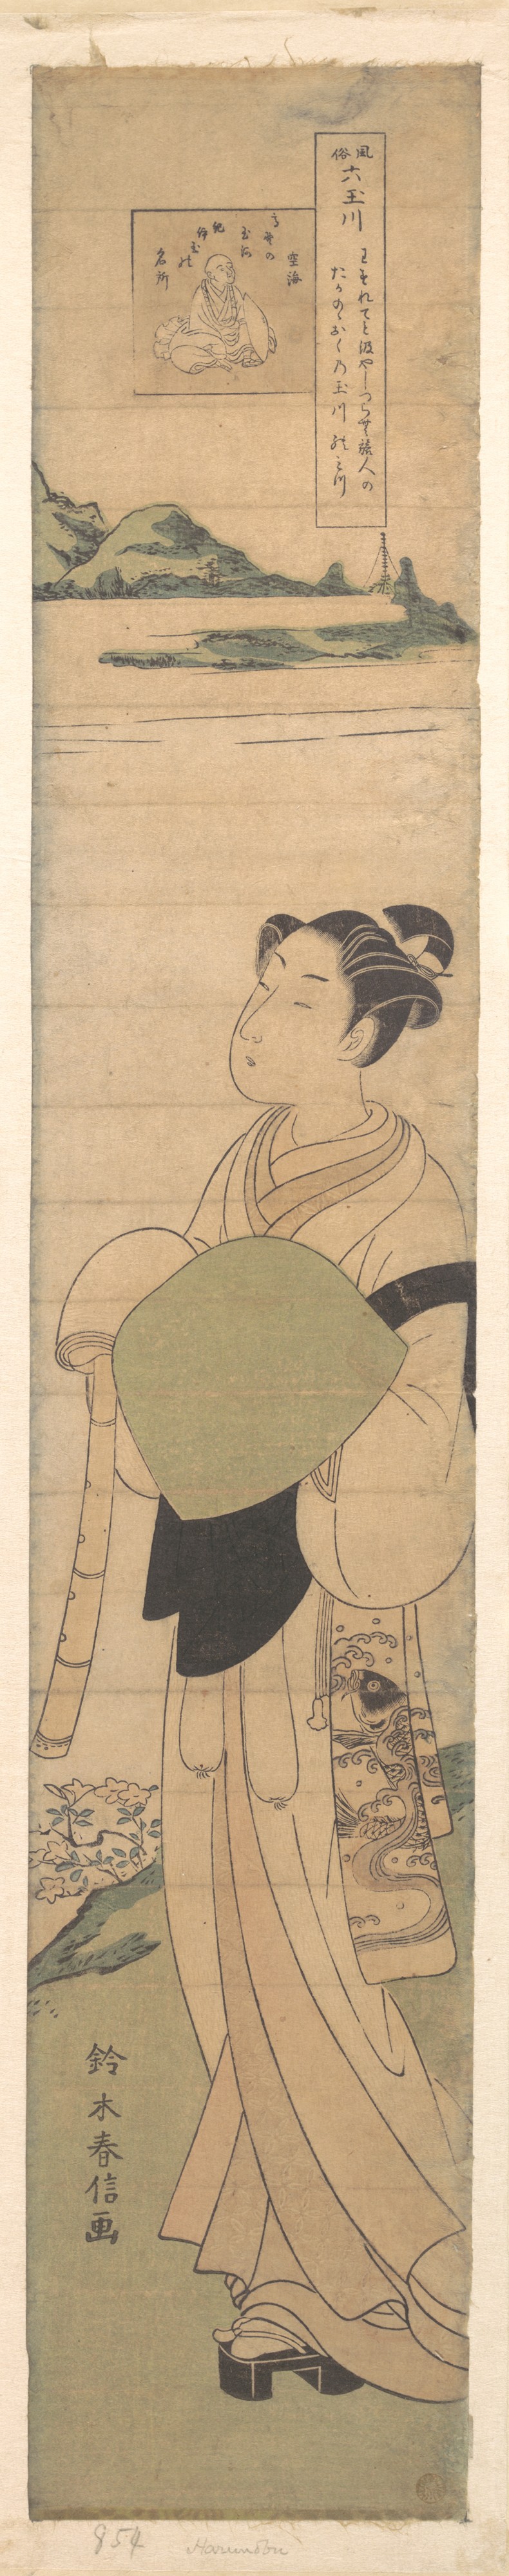 Suzuki Harunobu Artworks collected in Metmuseum